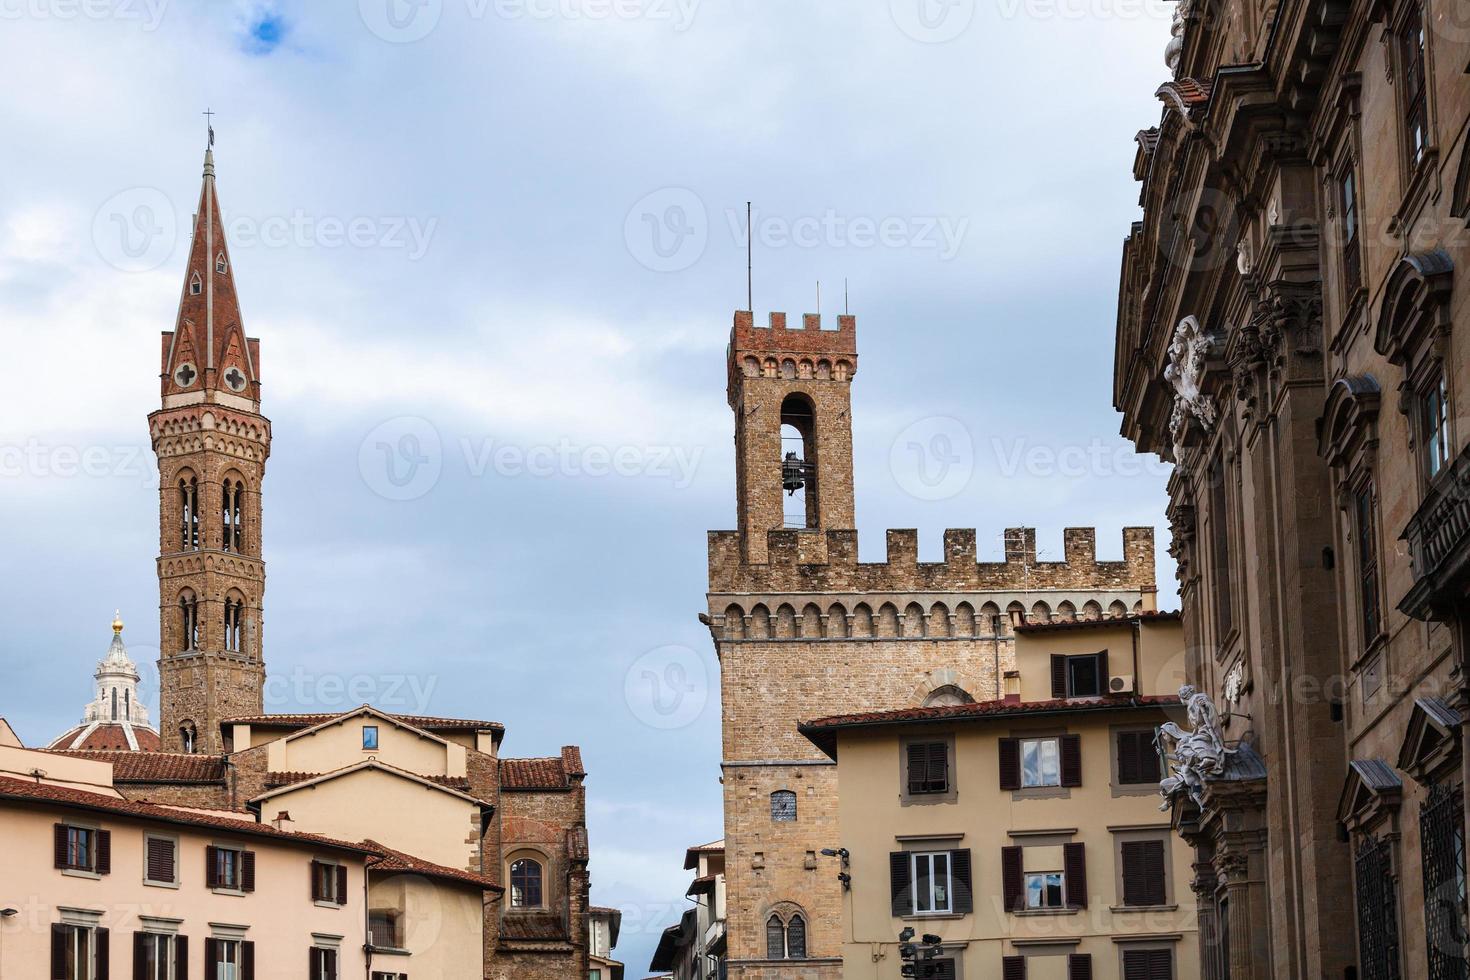 towers Badia Fiorentina and bargello over houses photo